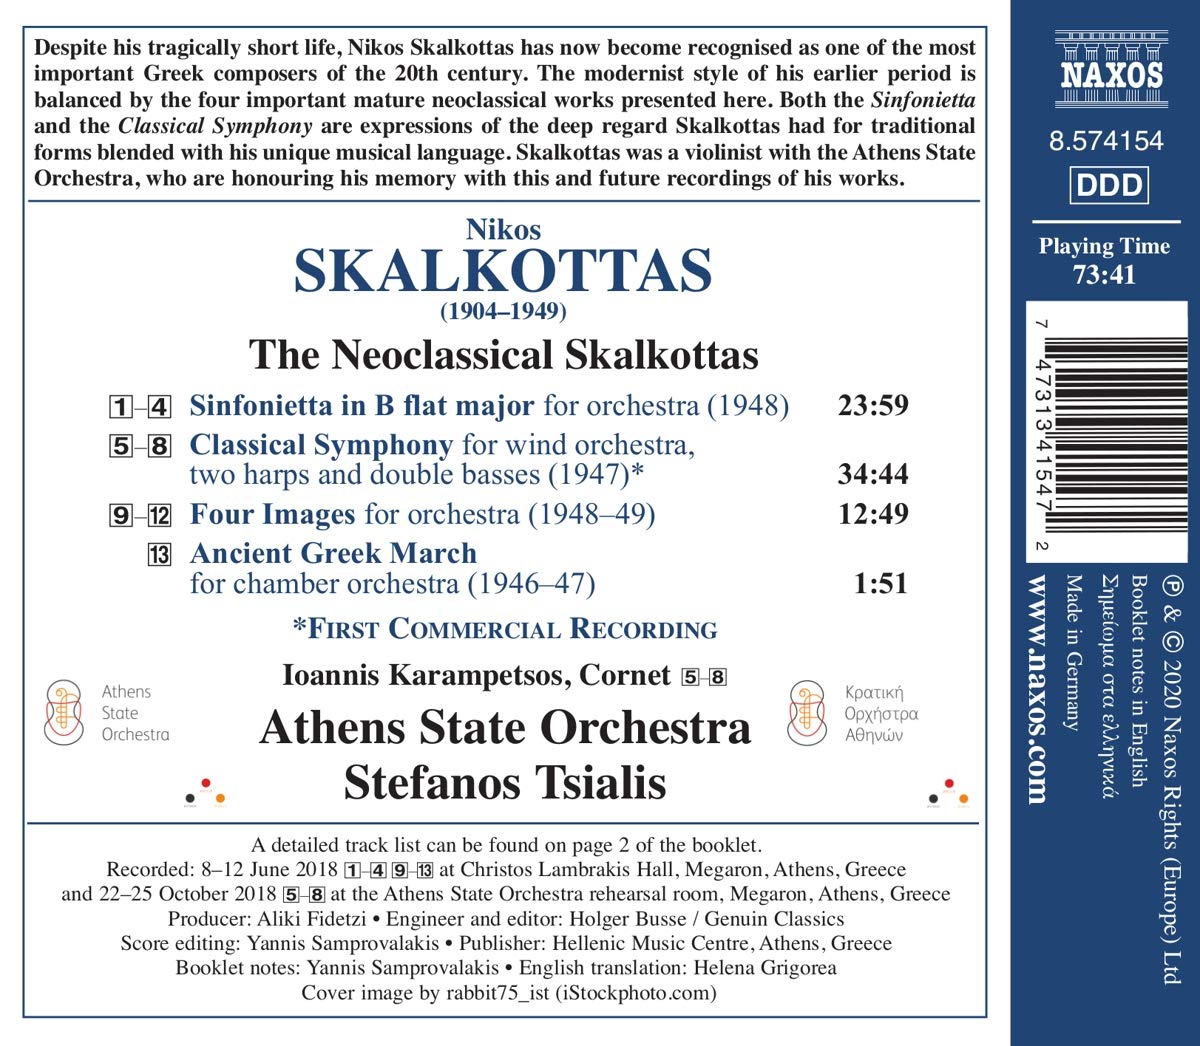 Stefanos Tsialis 니코스 스칼코타스: 신포니에타, 고전 교향곡, 네 개의 인상, 고대 그리스 행진곡 (The Neoclassical Skalkottas)